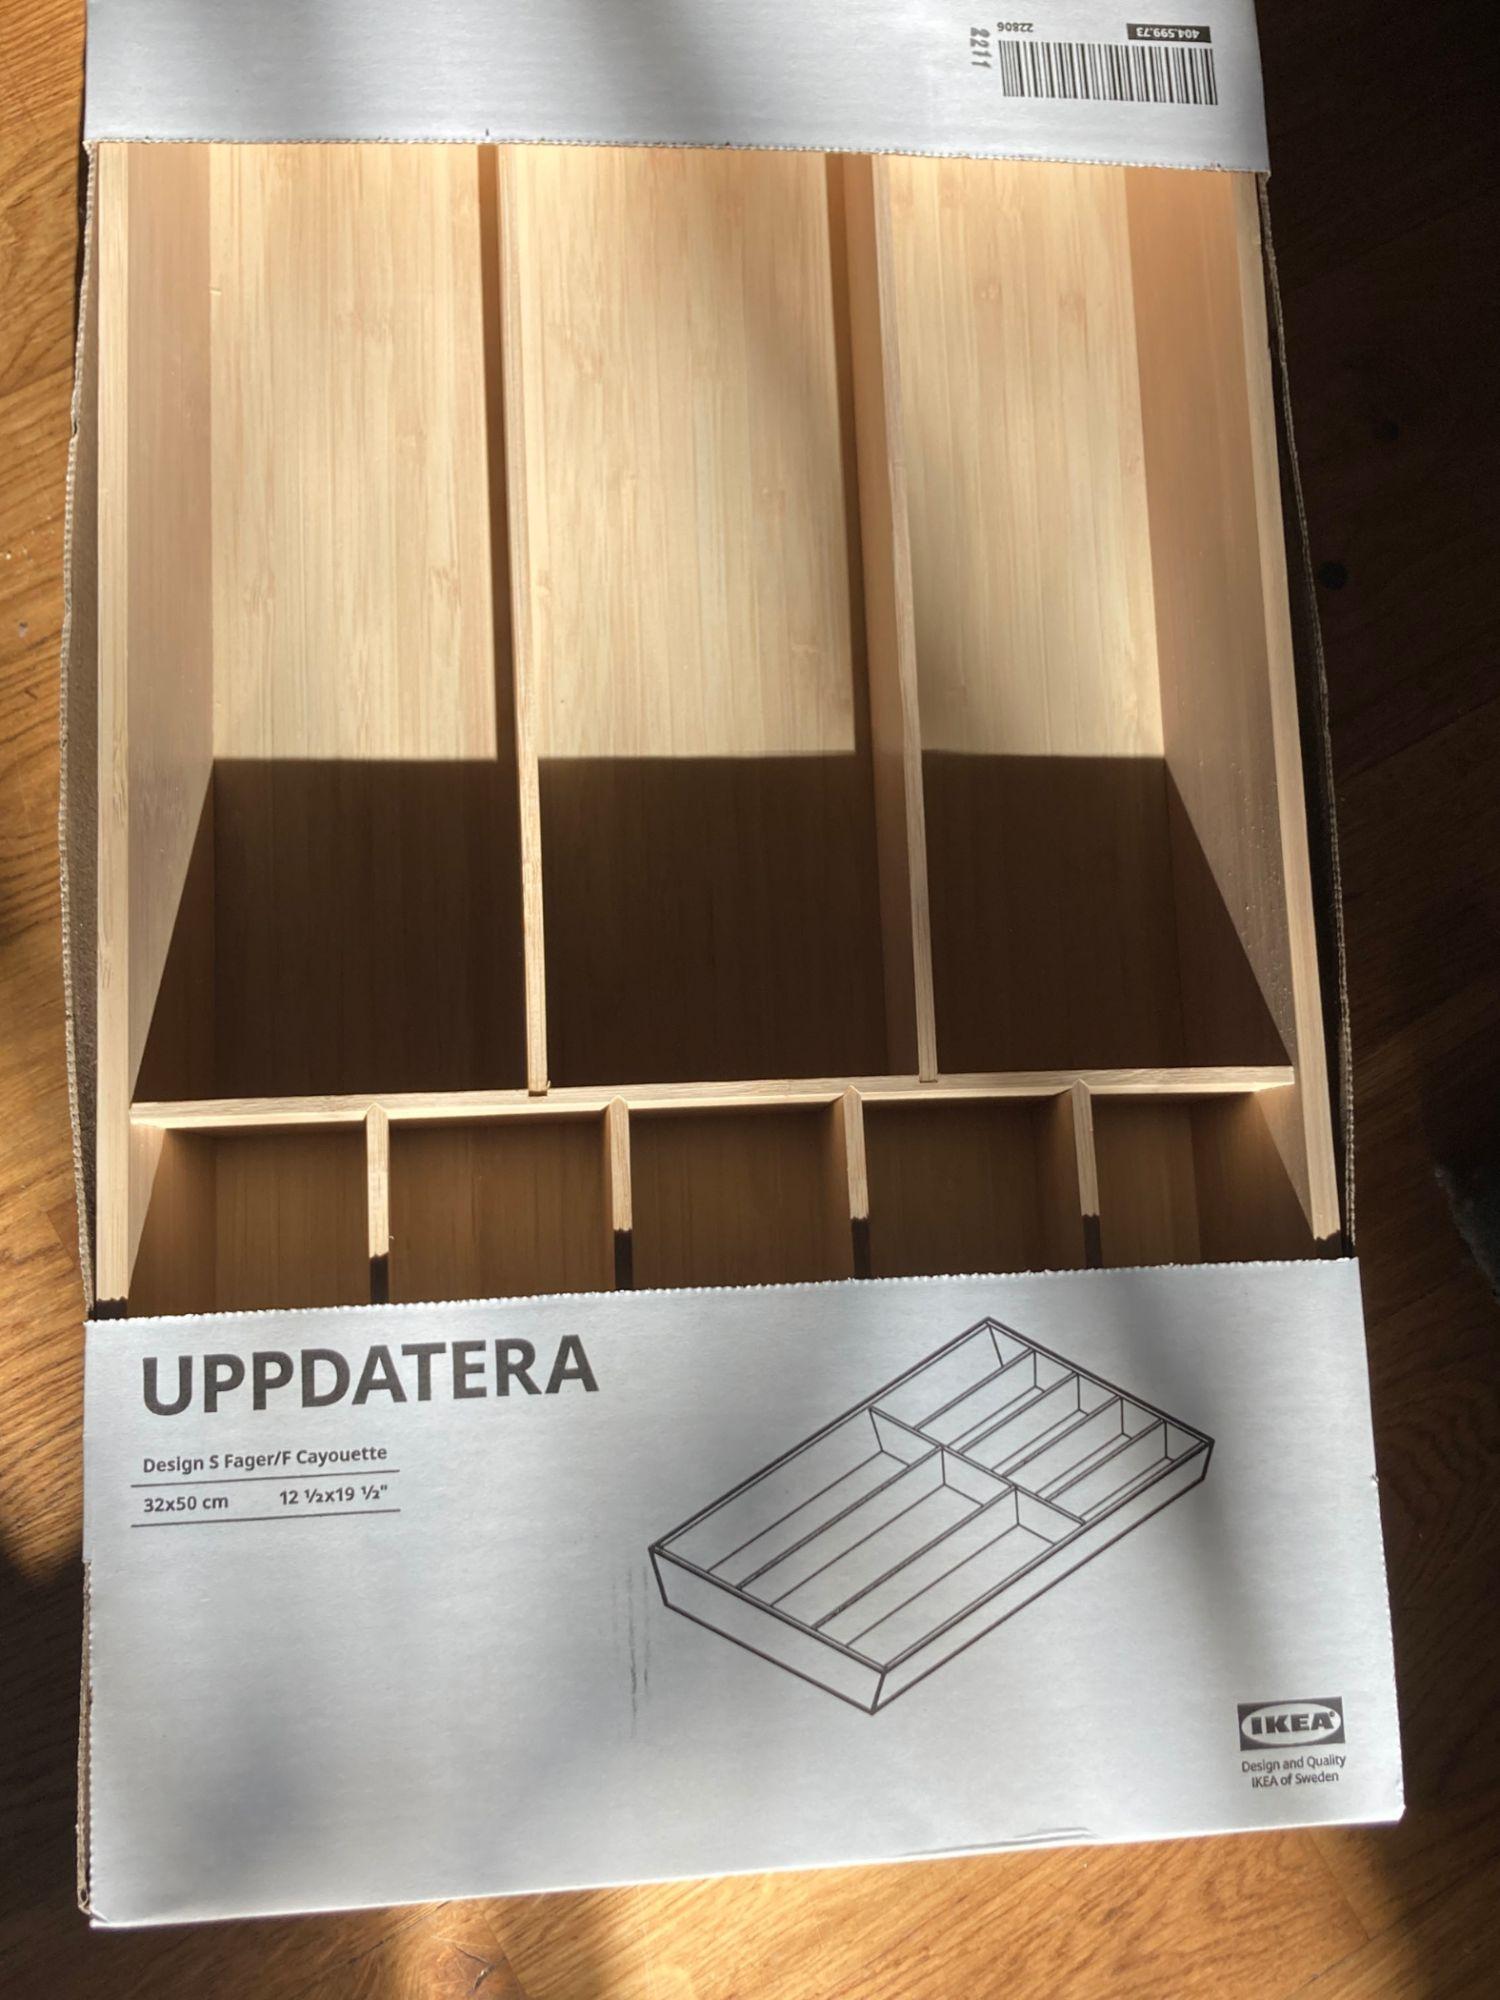 UPPDATERA Range-couverts/range-couteaux, bambou clair, 52x50 cm - IKEA